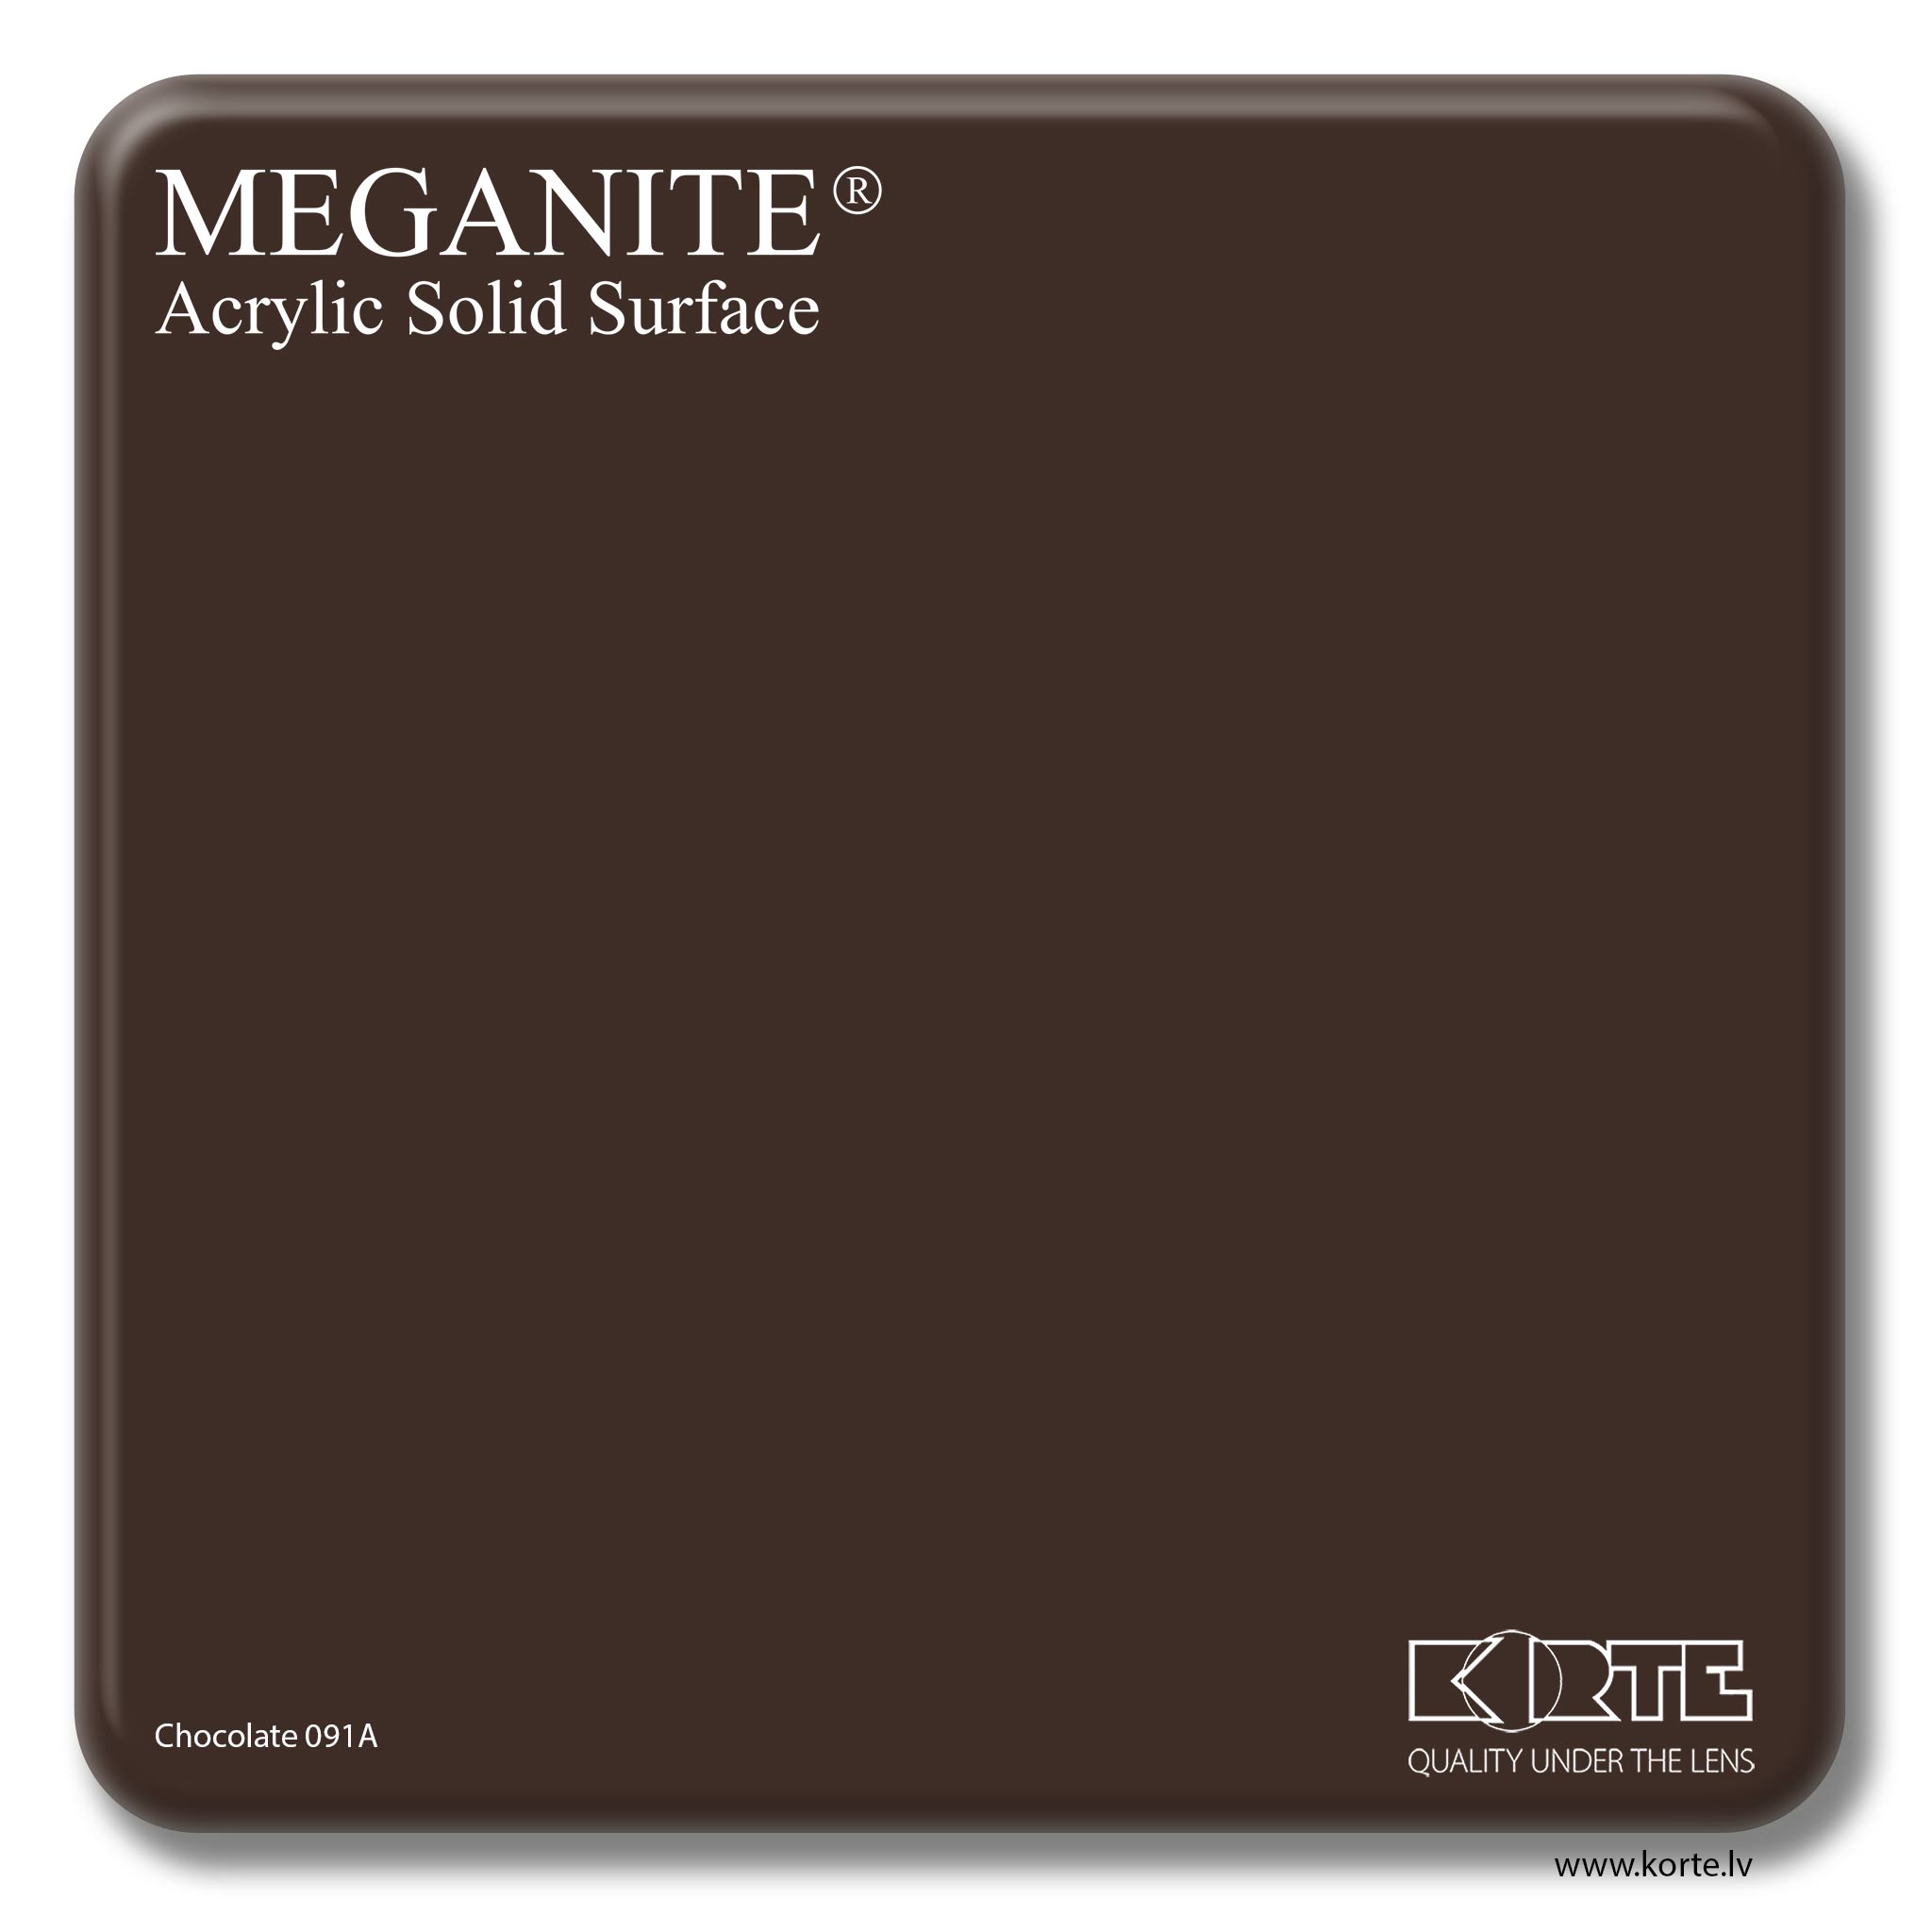 Meganite Chocolate 091A